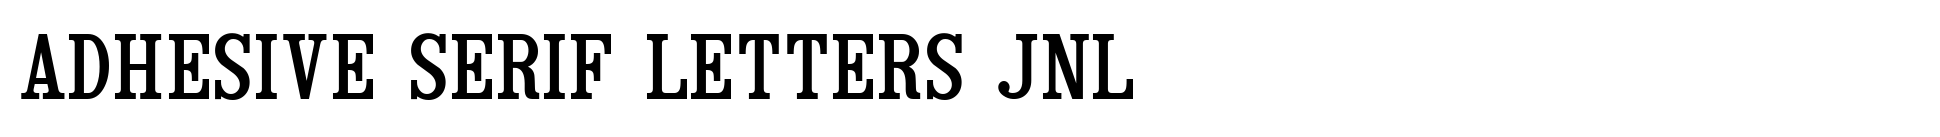 Adhesive Serif Letters JNL